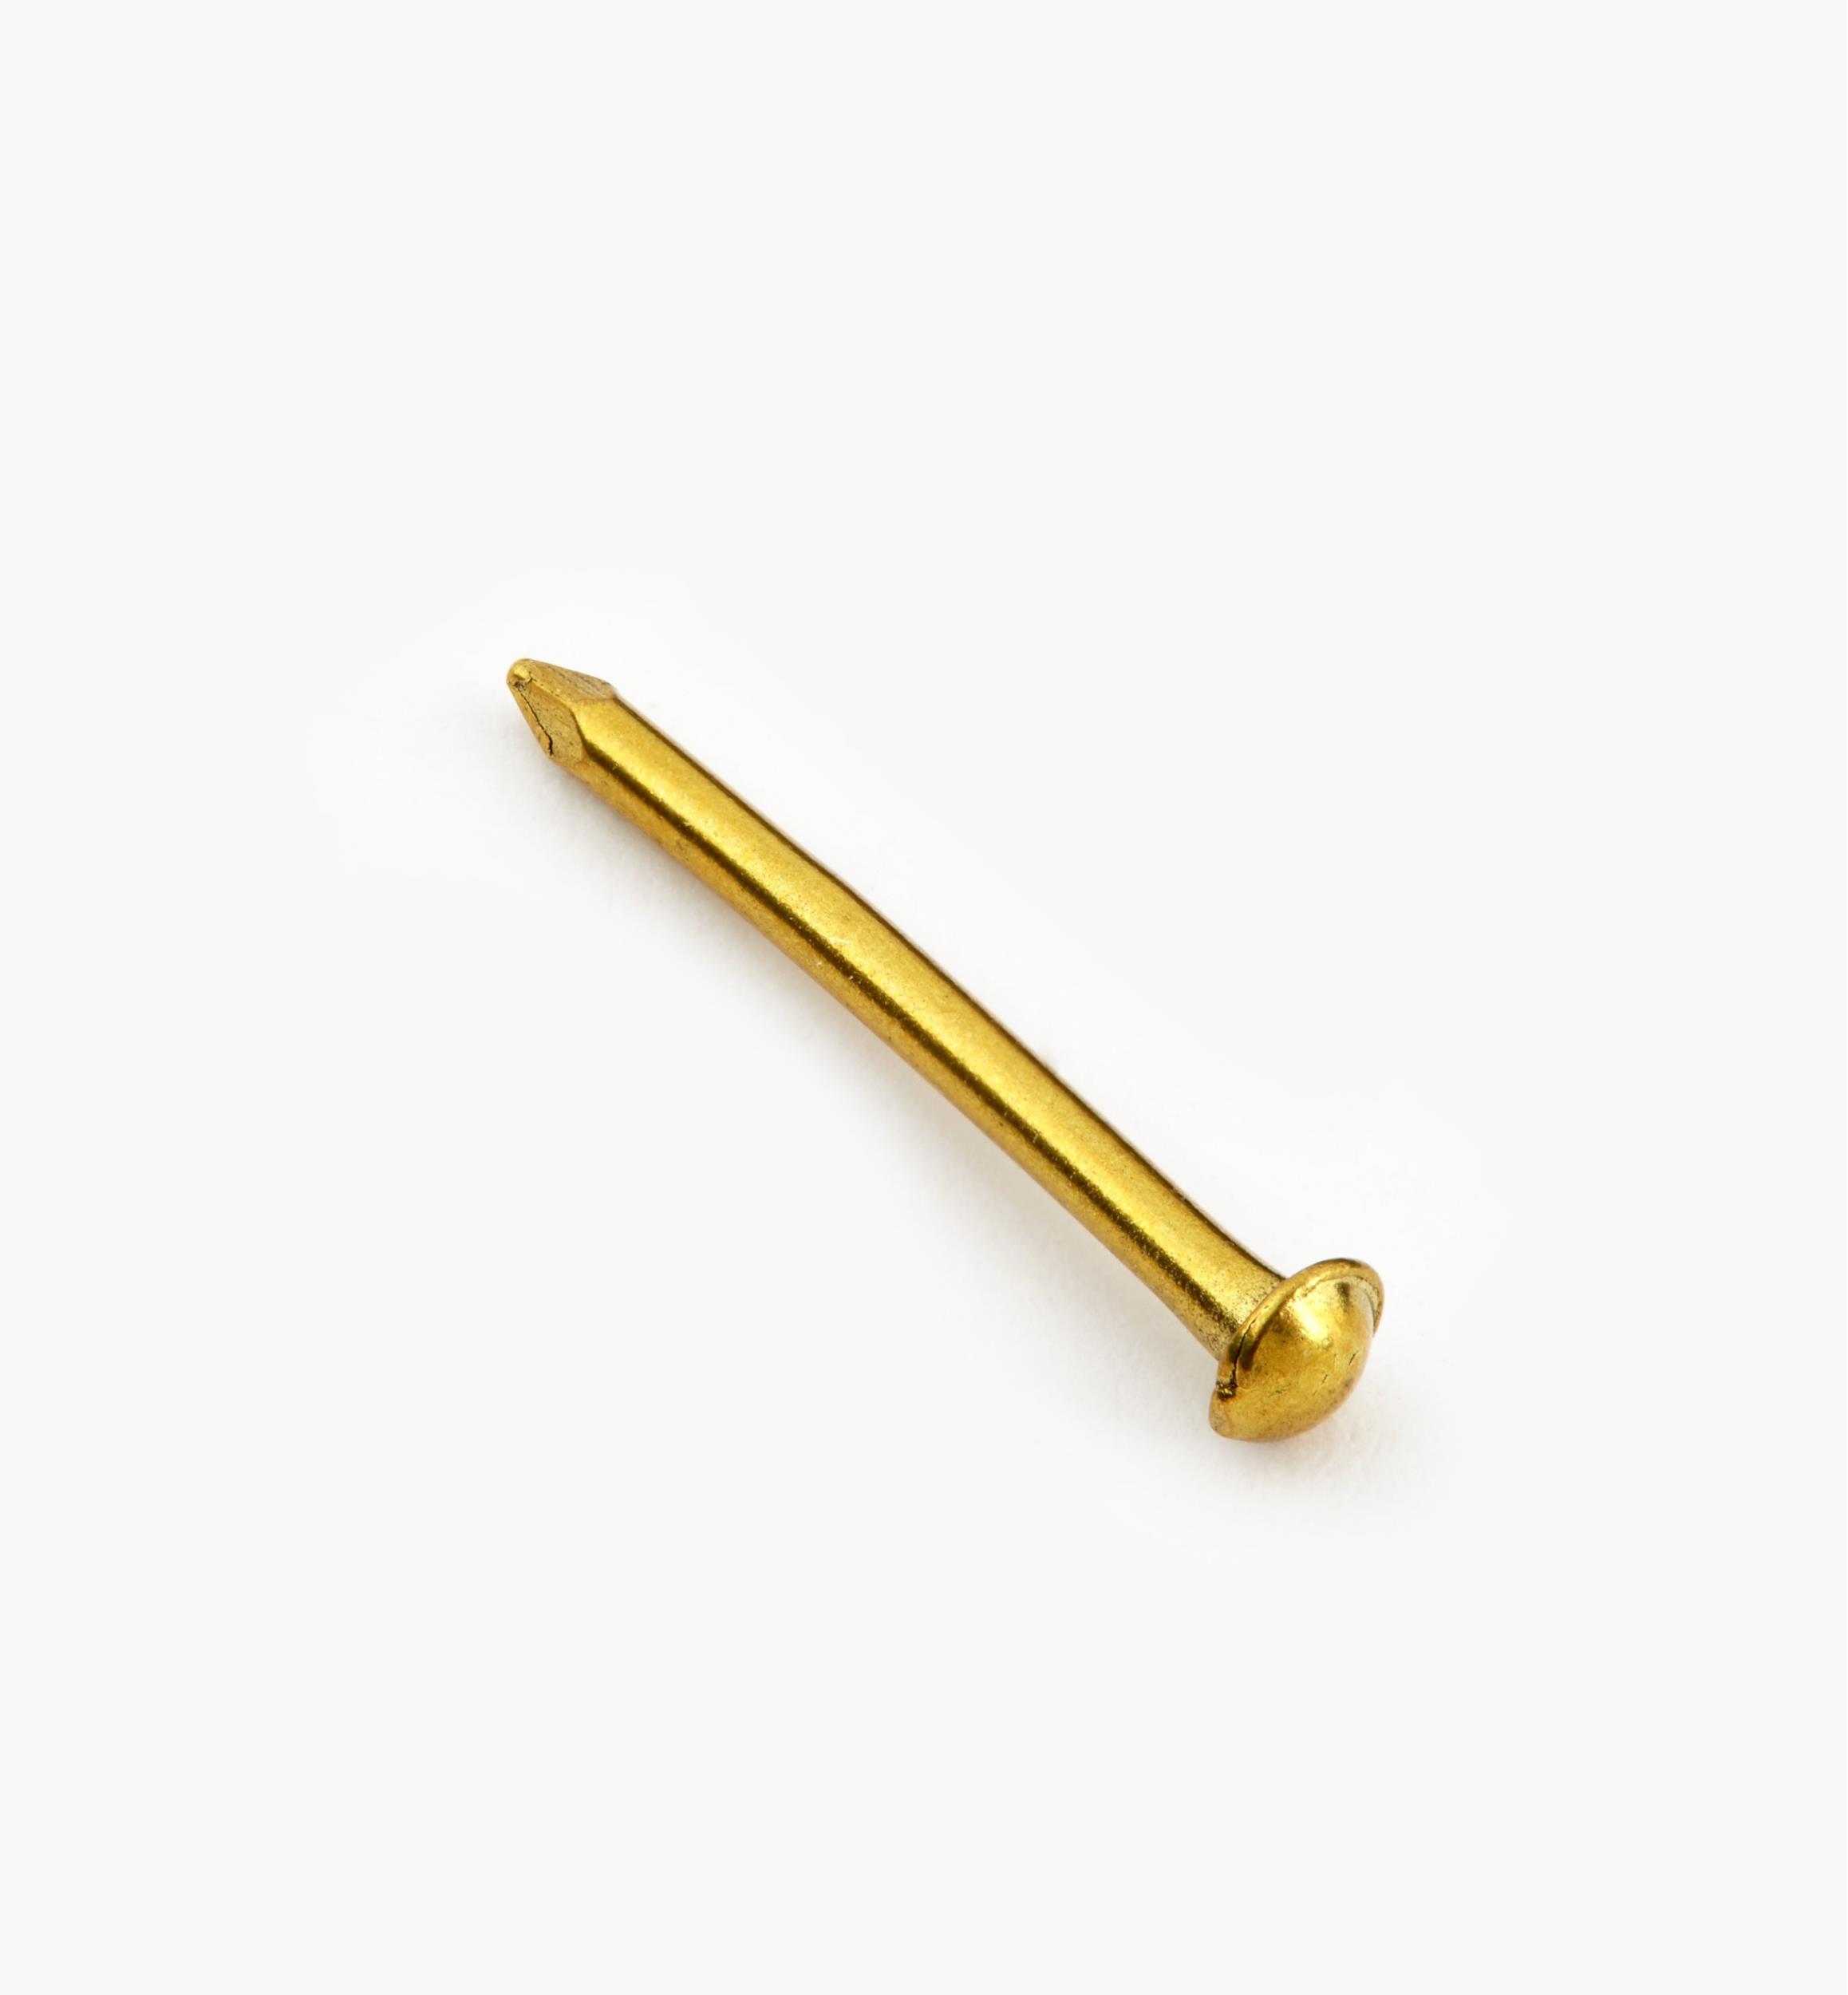 1/2” Solid Brass Brads 200pcs Small Head 18 gauge Escutcheon pins Europe made 